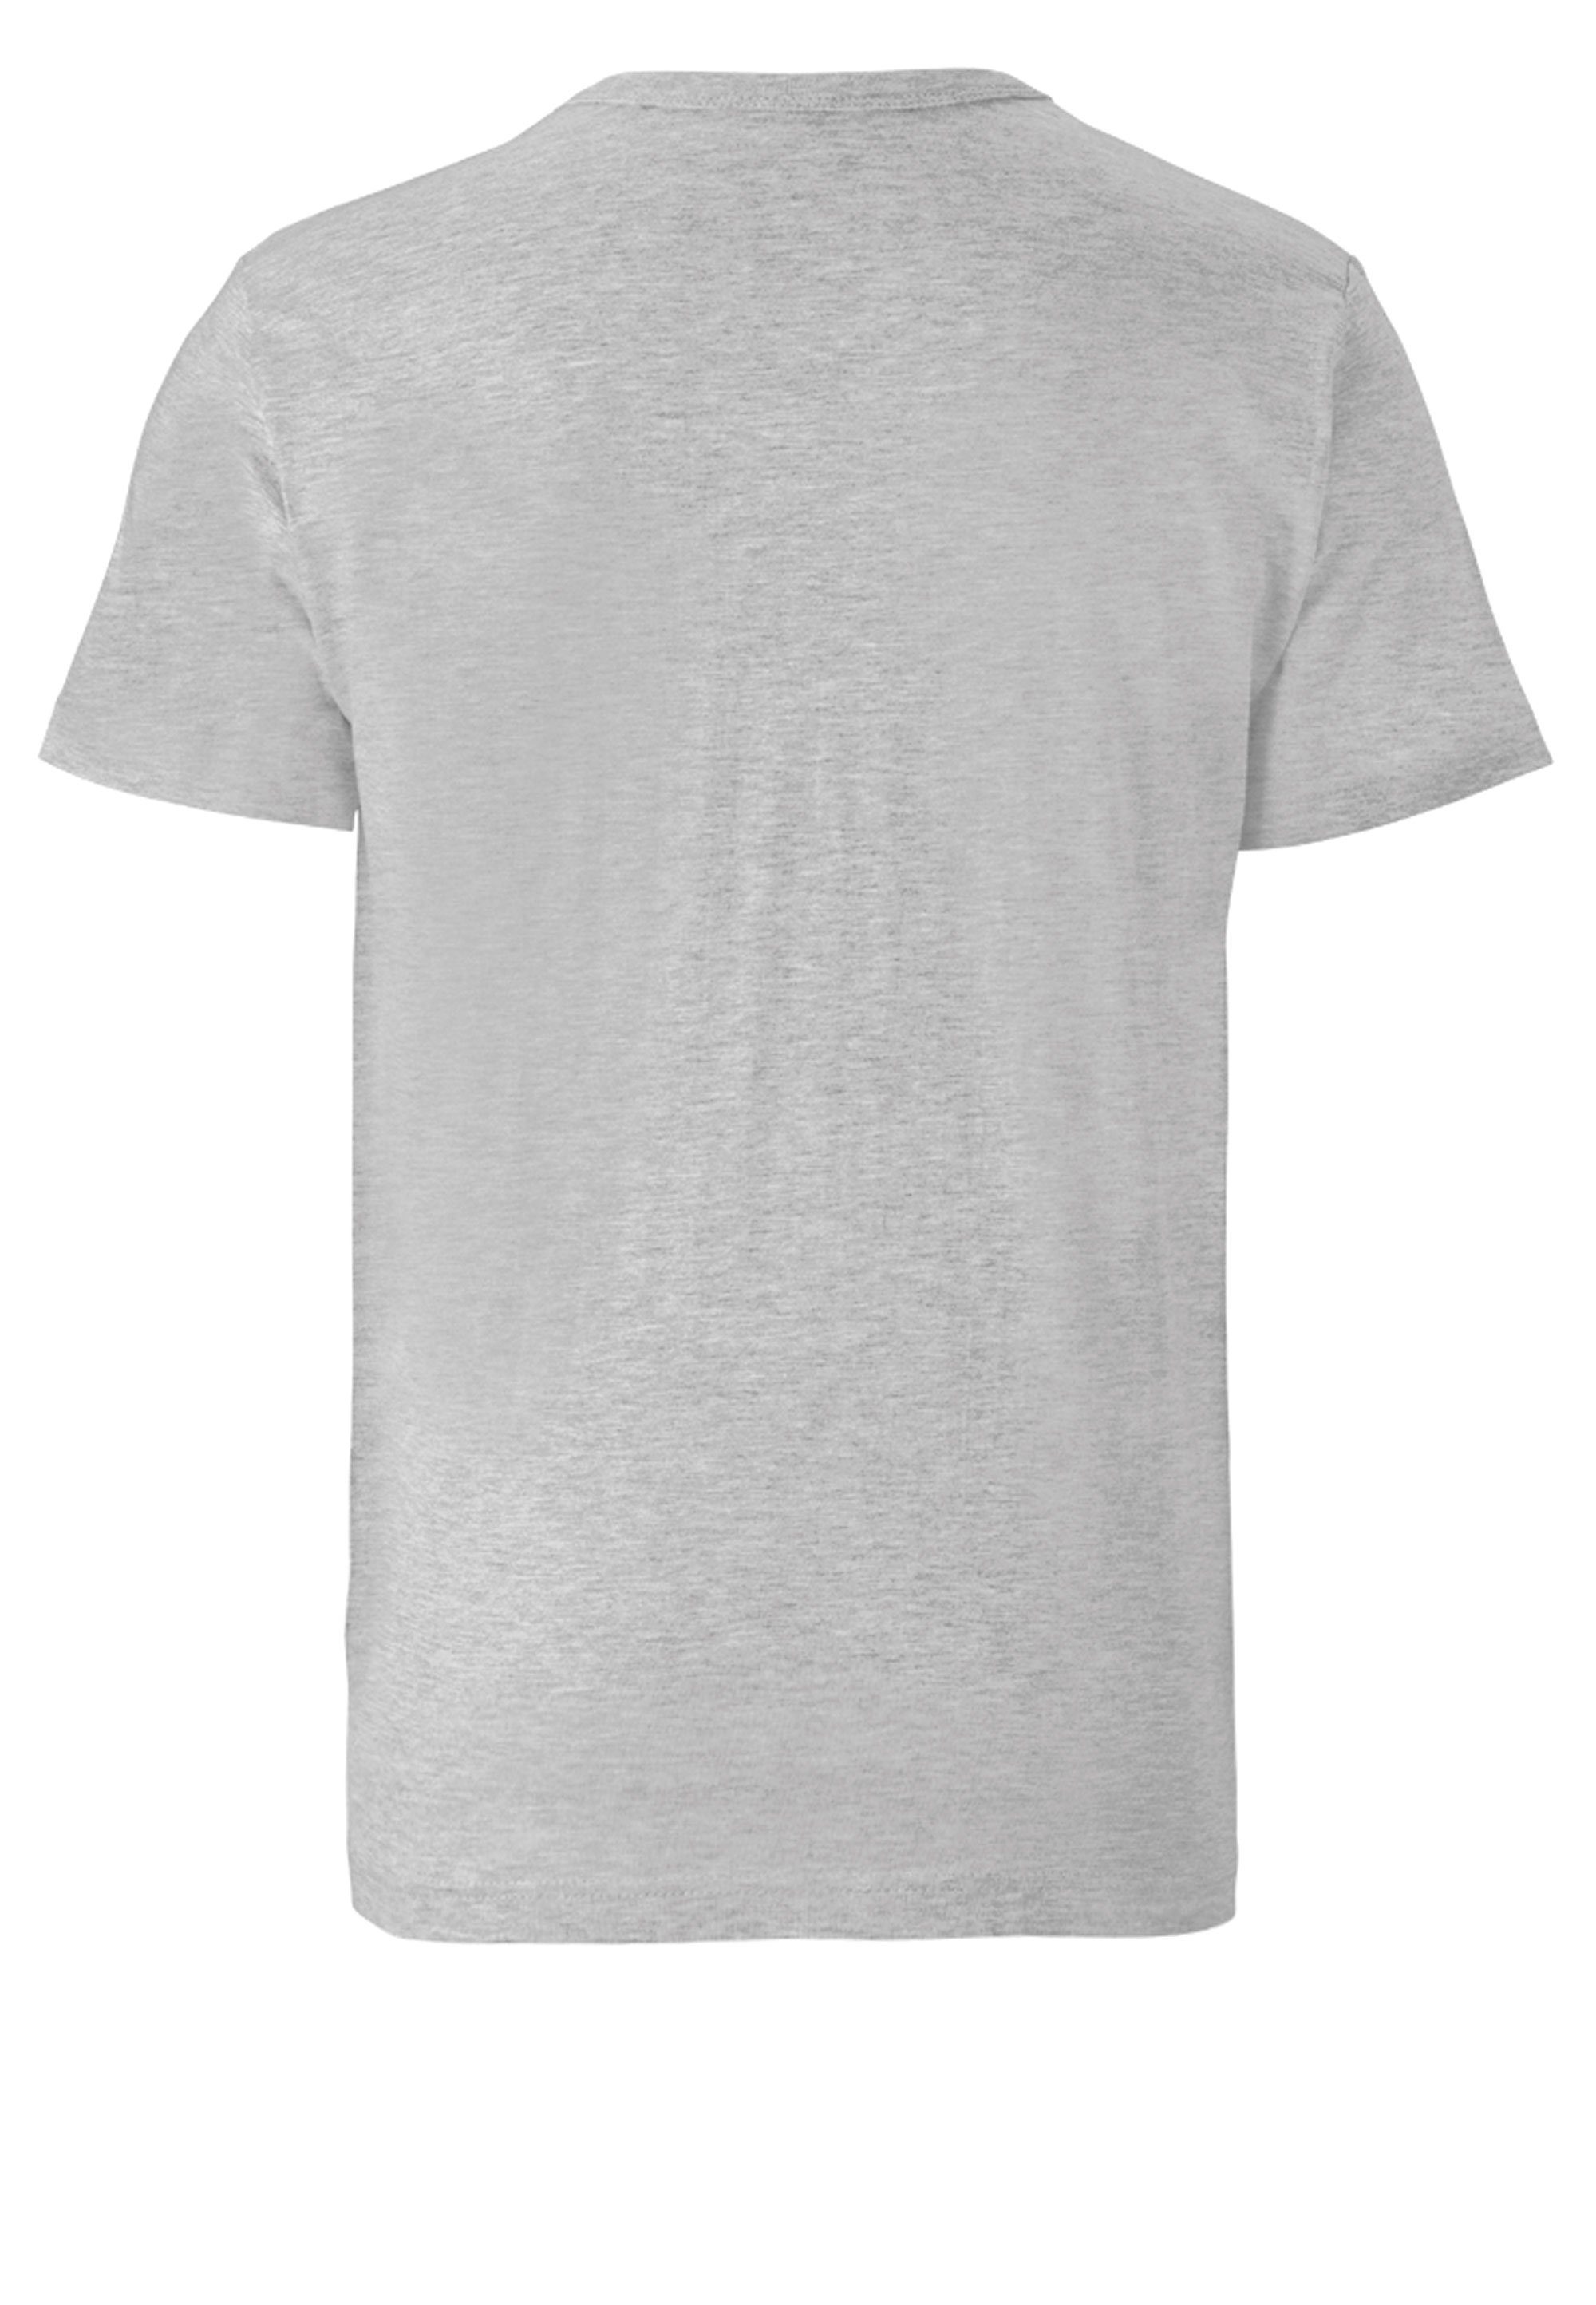 LOGOSHIRT - mit Krümelmonster Originalddesign lizenziertem T-Shirt Sesamstrasse grau-meliert